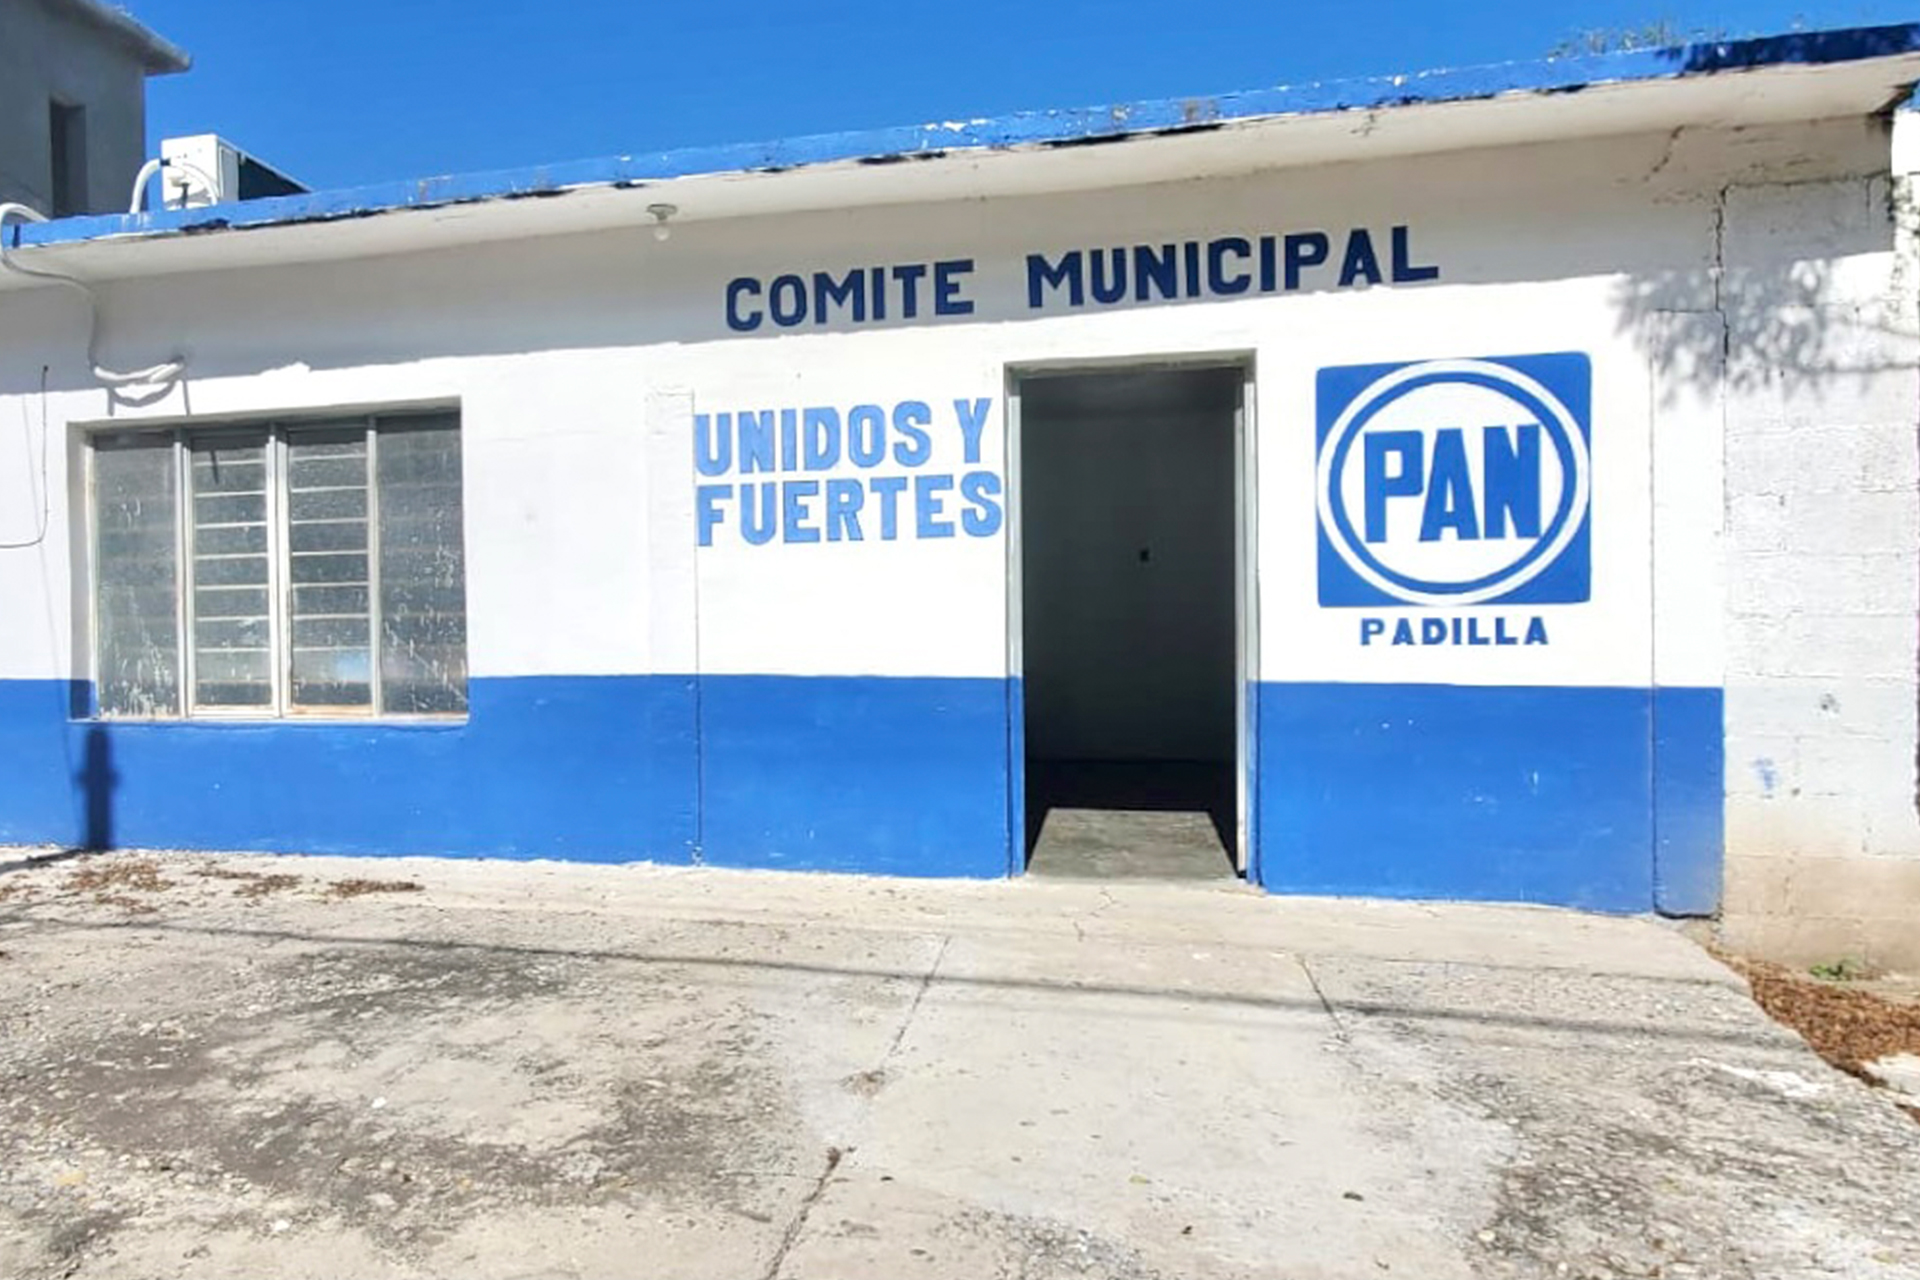 https://pantamaulipas.org/wp-content/uploads/2021/12/location-padilla.jpg